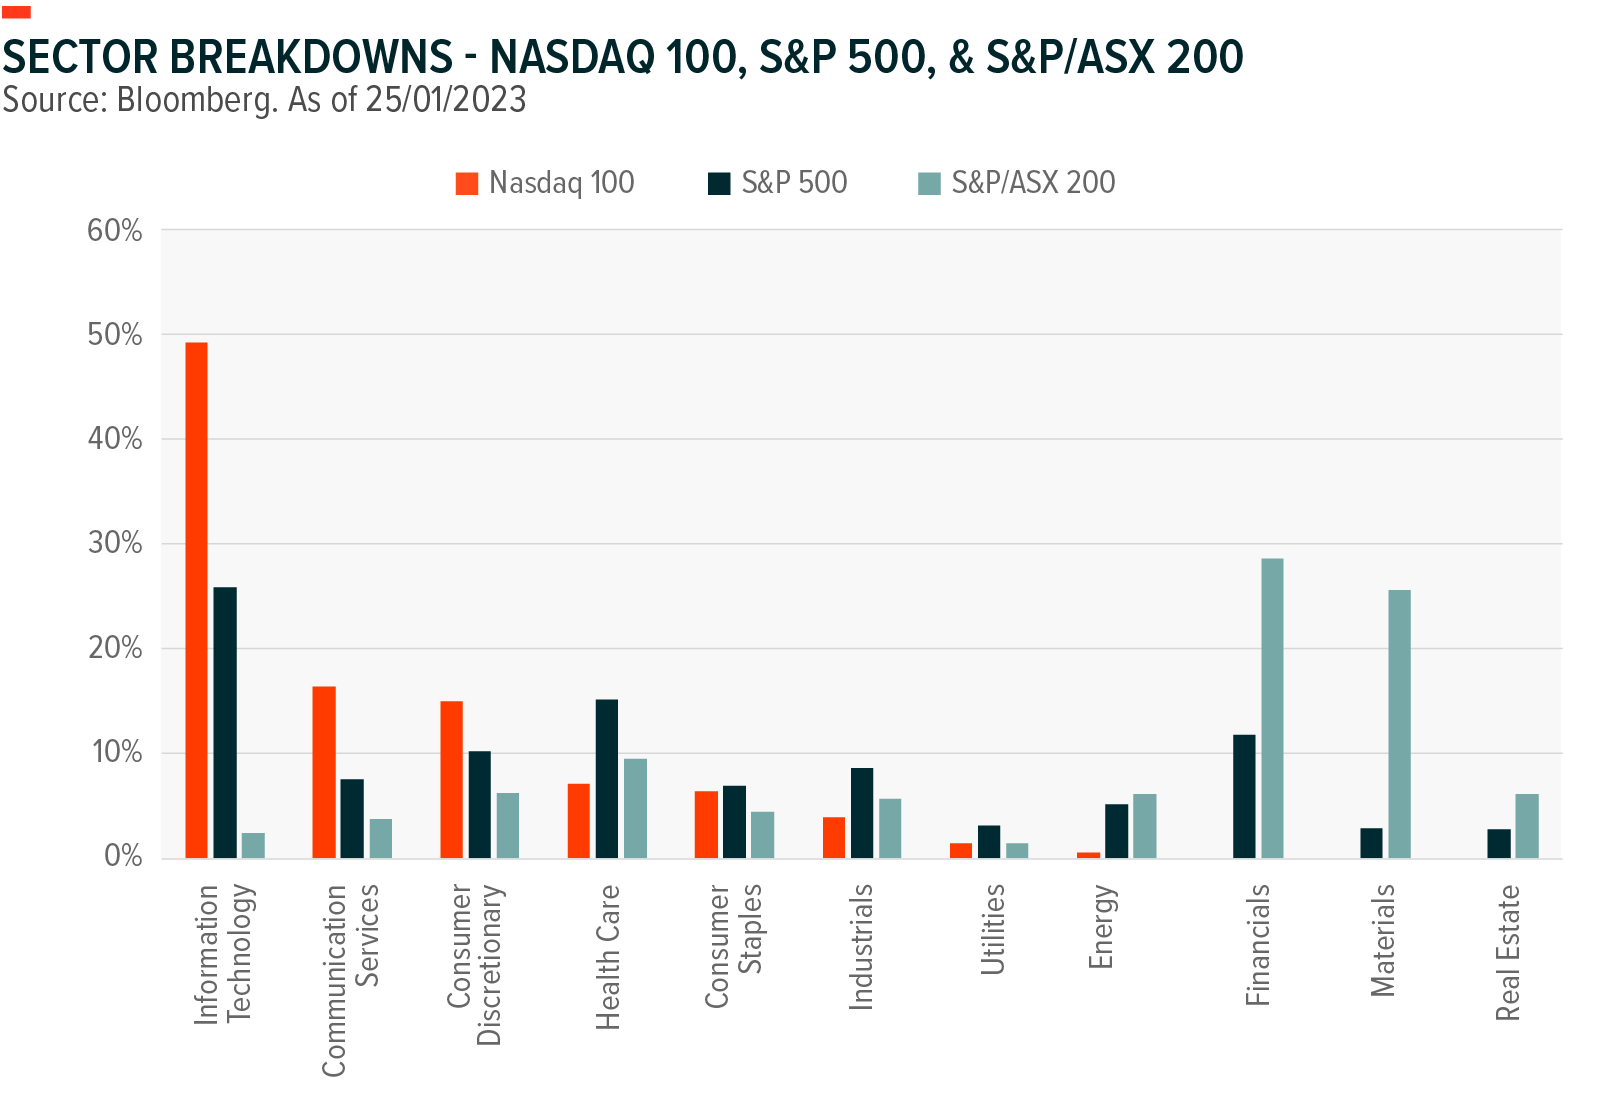 Sector Breakdown: Nasdaq100, S&P 500, S&P/ASX 200